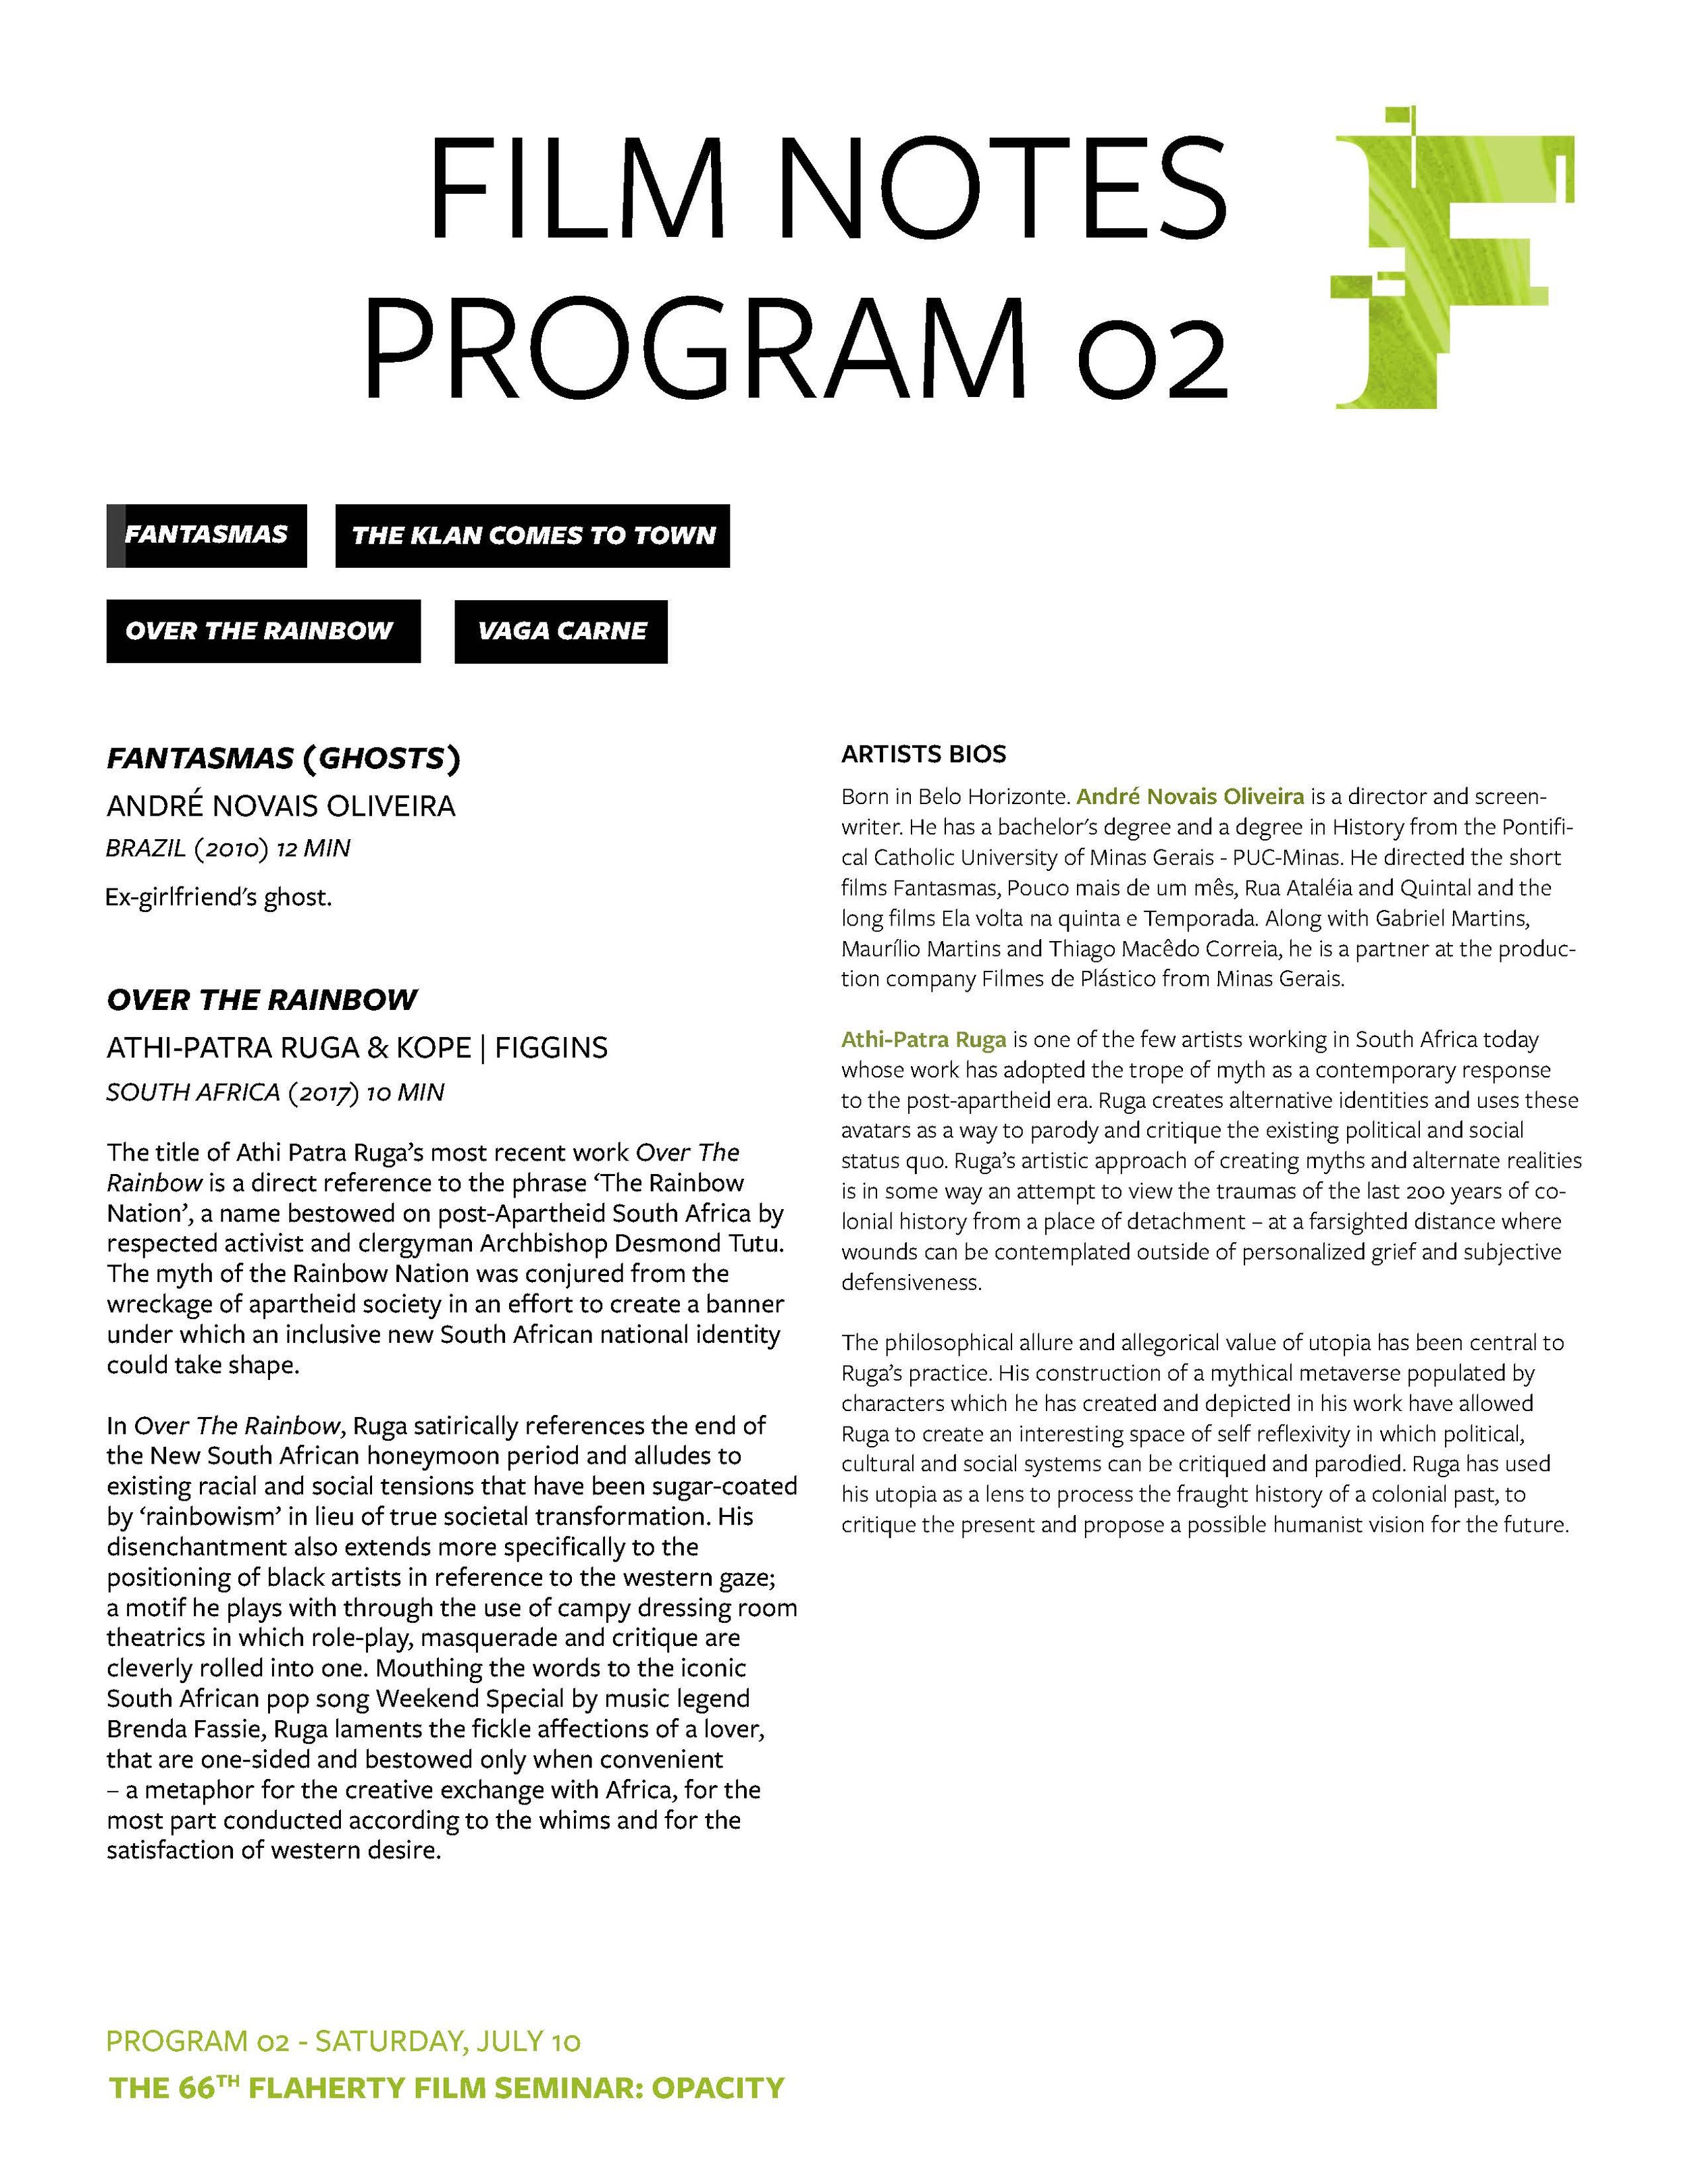 Program 02 Film Notes - revised_Page_1.jpg